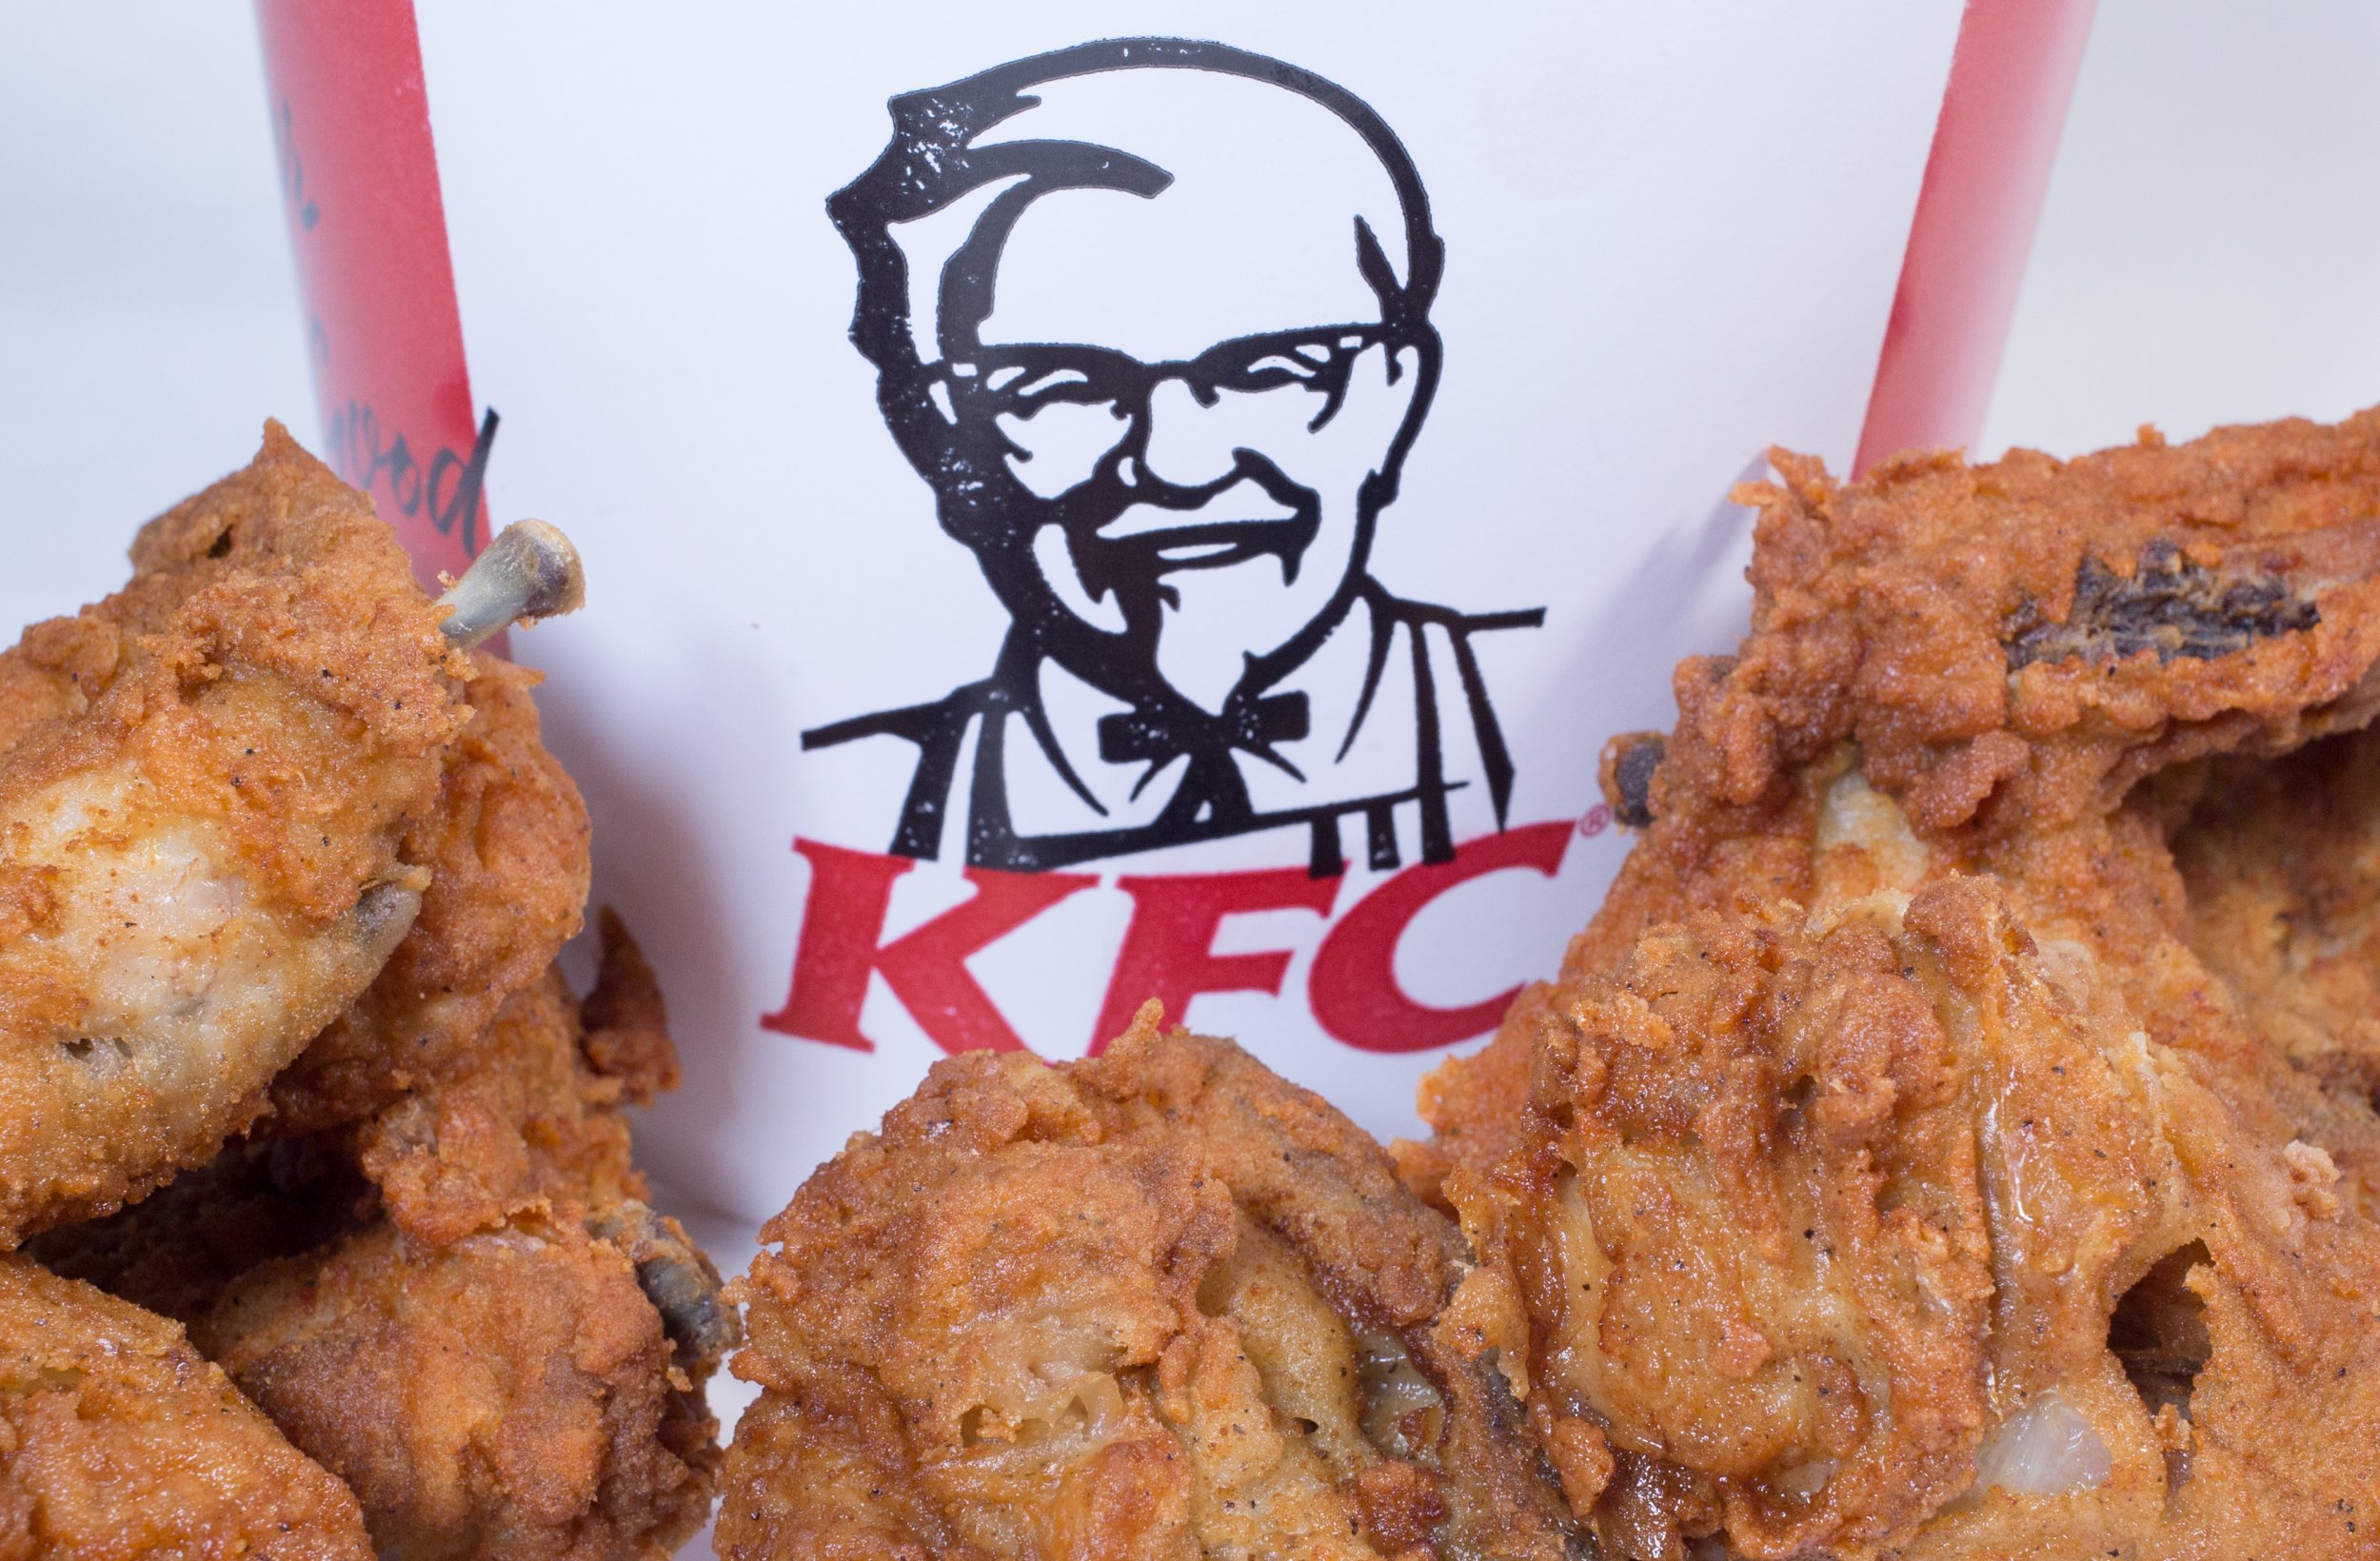 vegan KFC